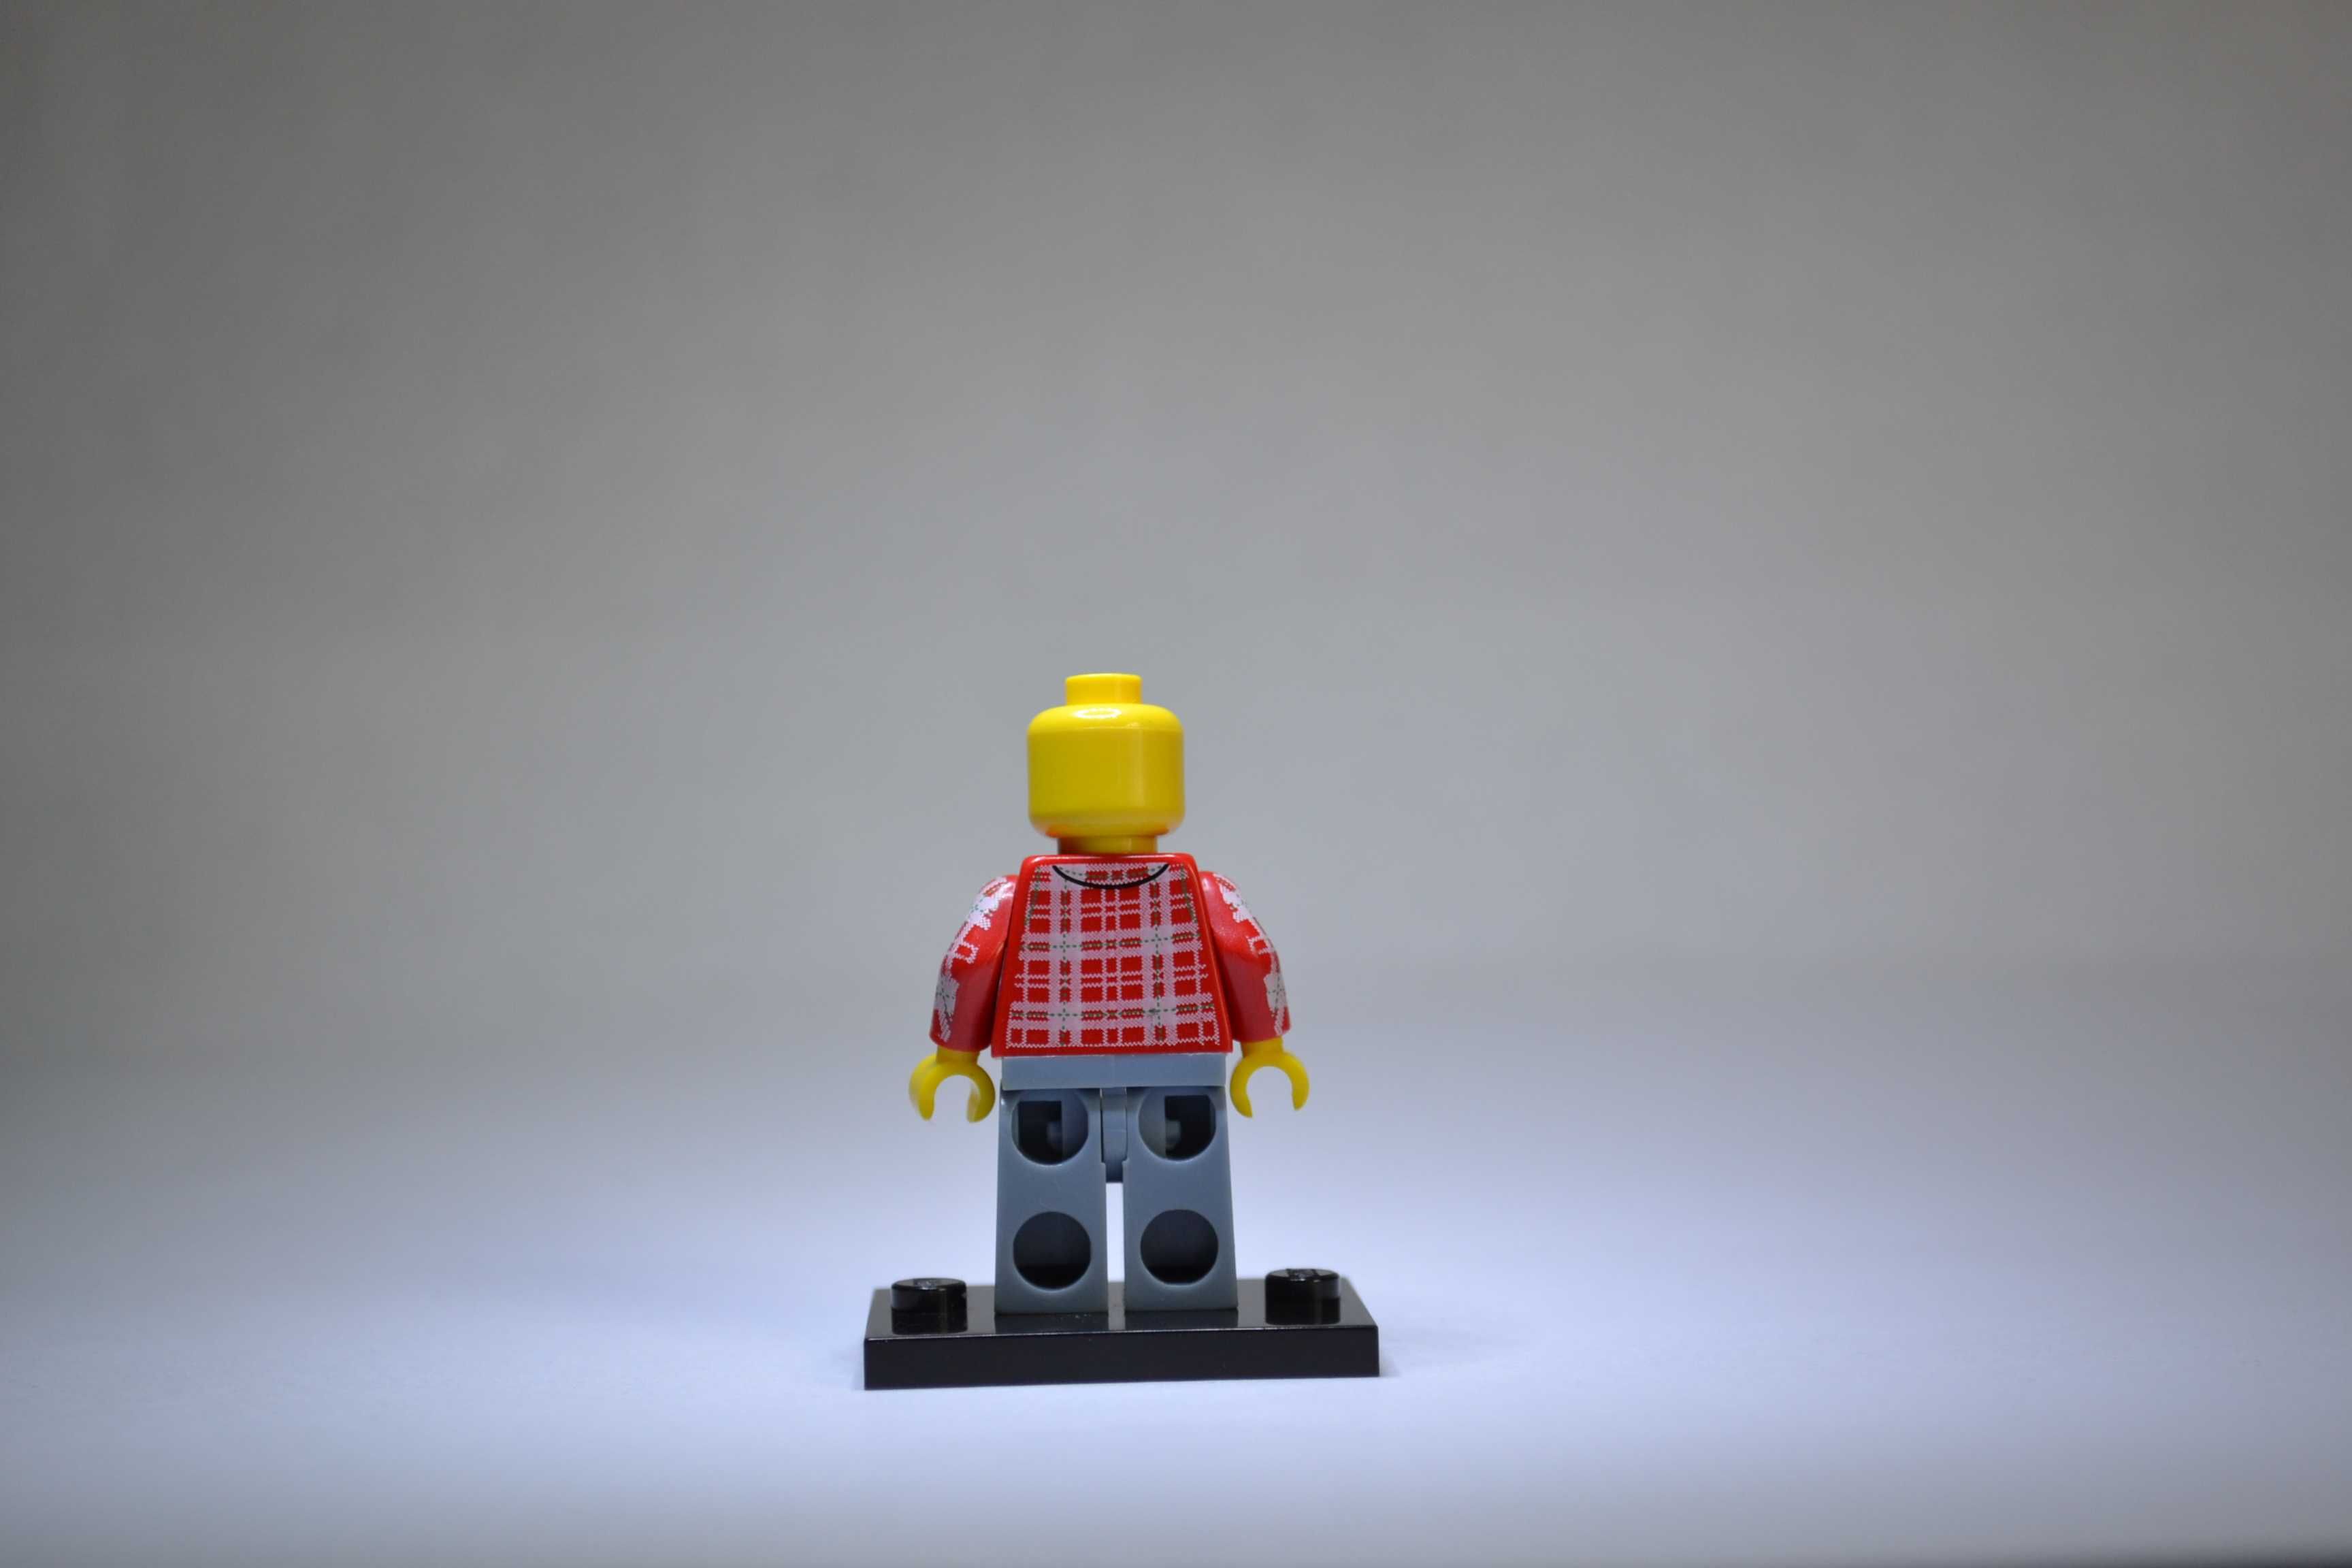 Minifigurka LEGO seria 5 - lumberjack